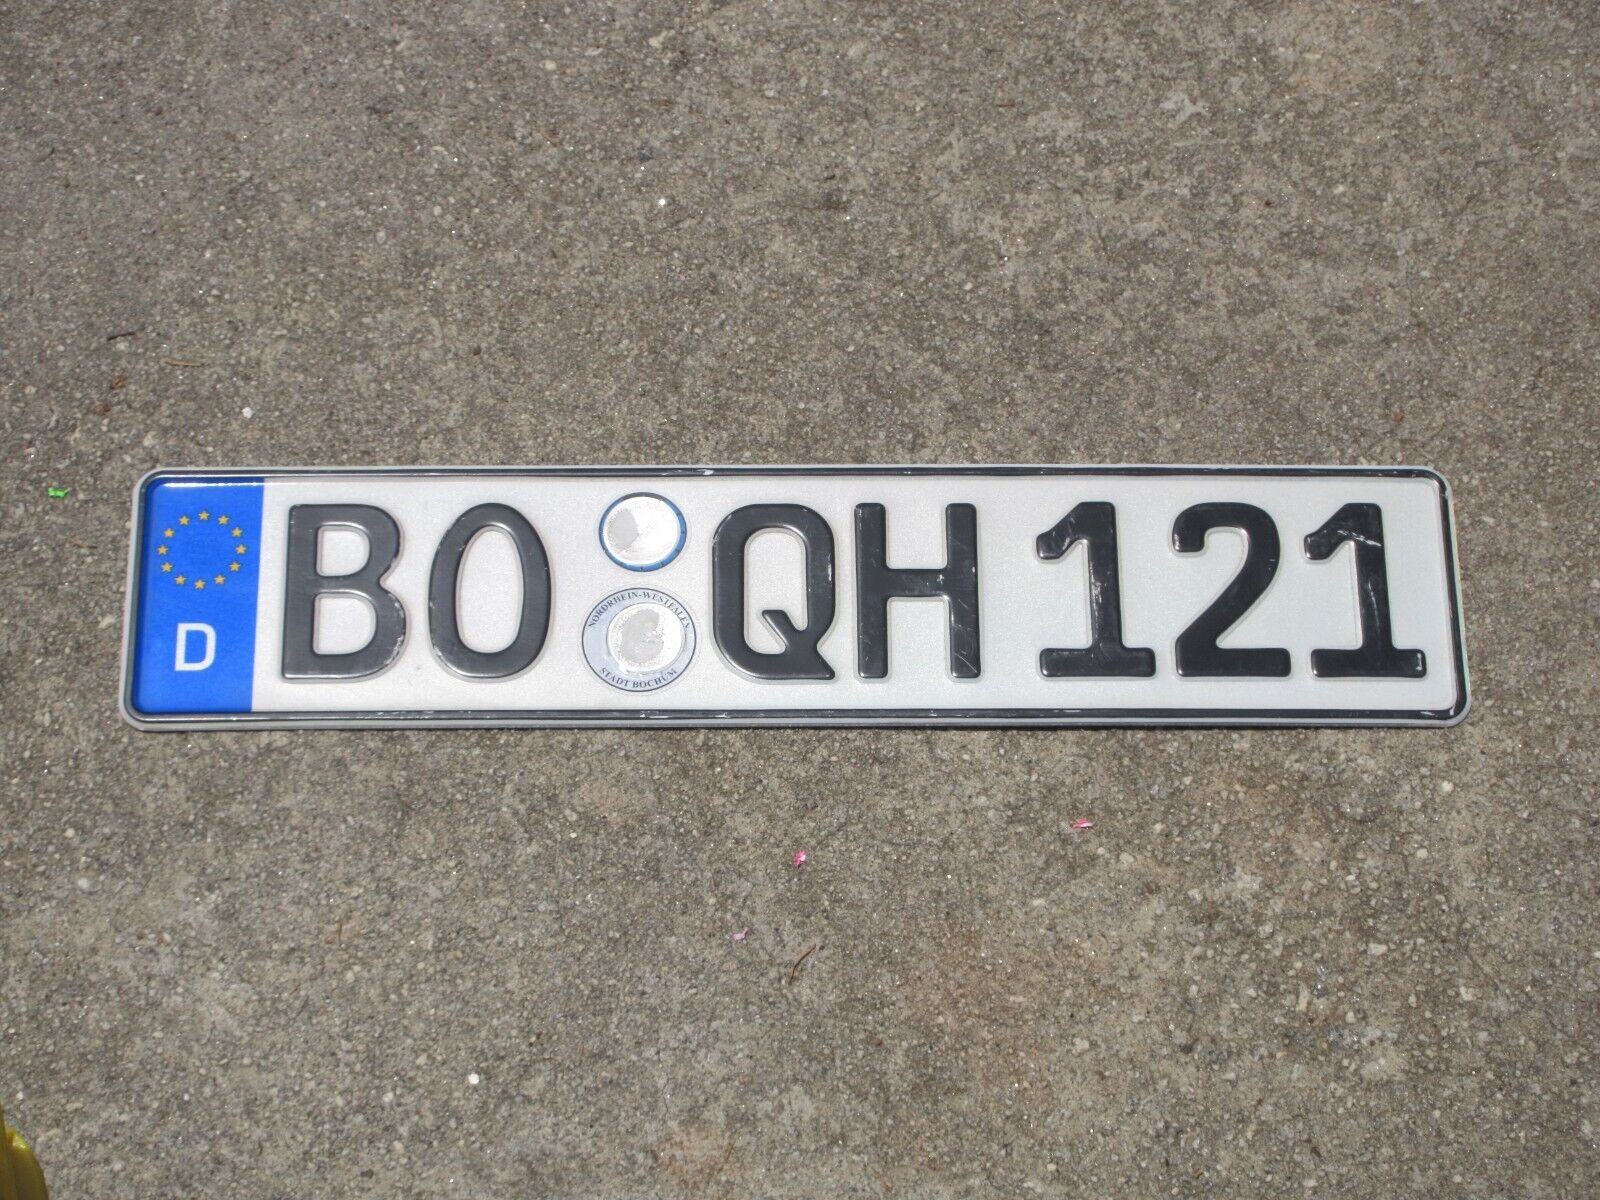 Germany Euroband License Plate BOQH 121 European Union Europe Euro German Bochum